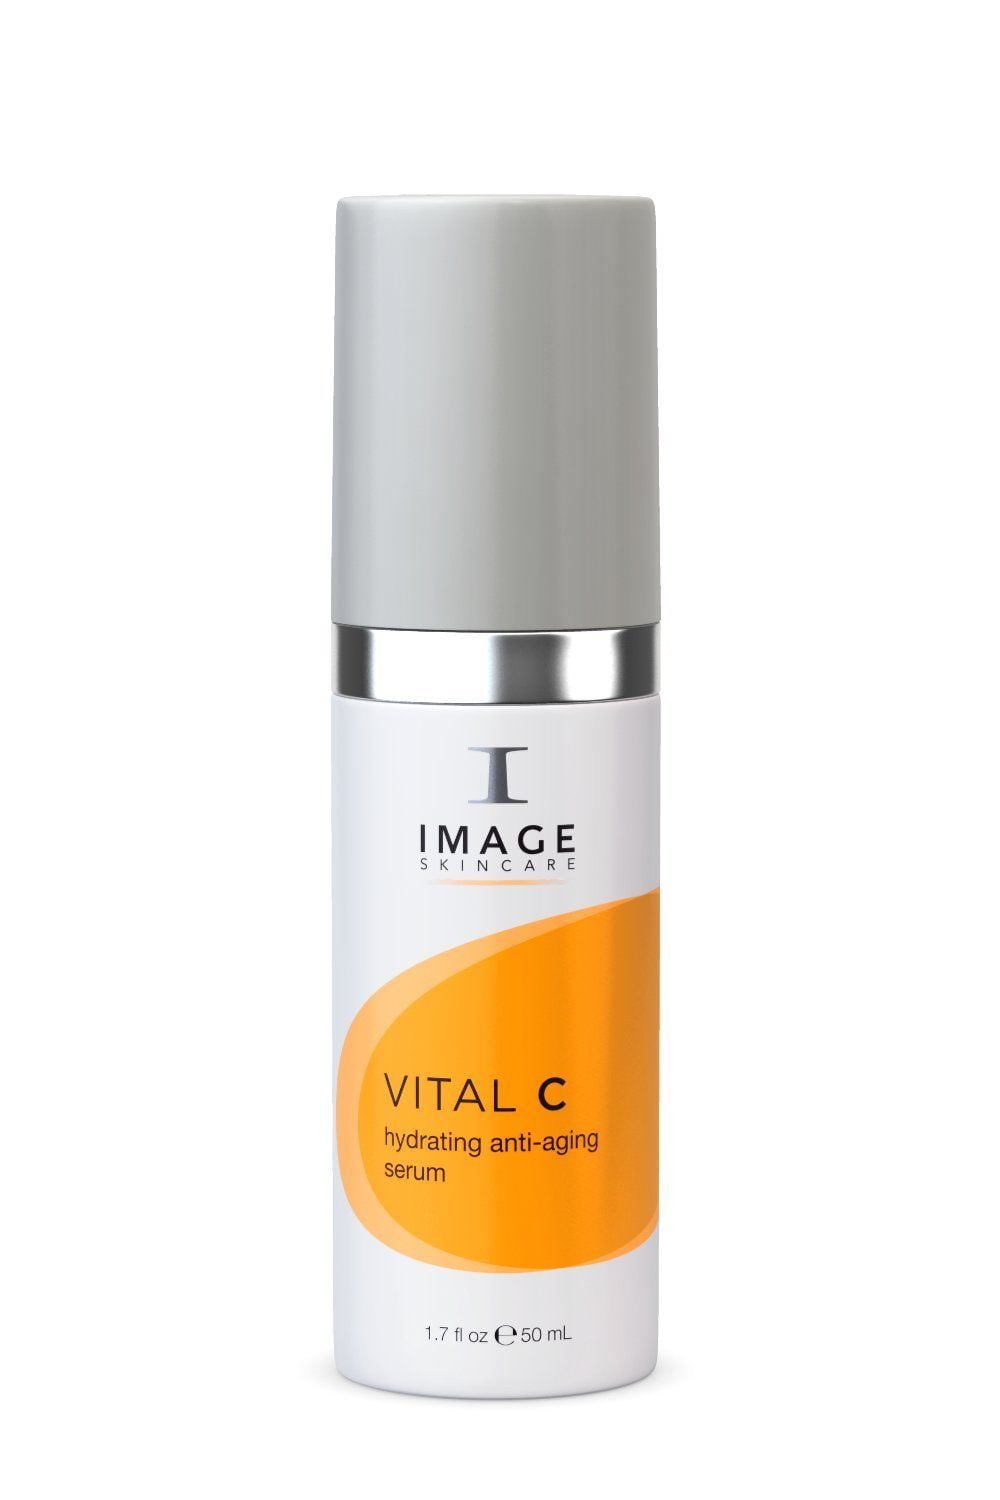 image skincare vital c hydrating anti aging serum ingredients anti aging hidratáló recept